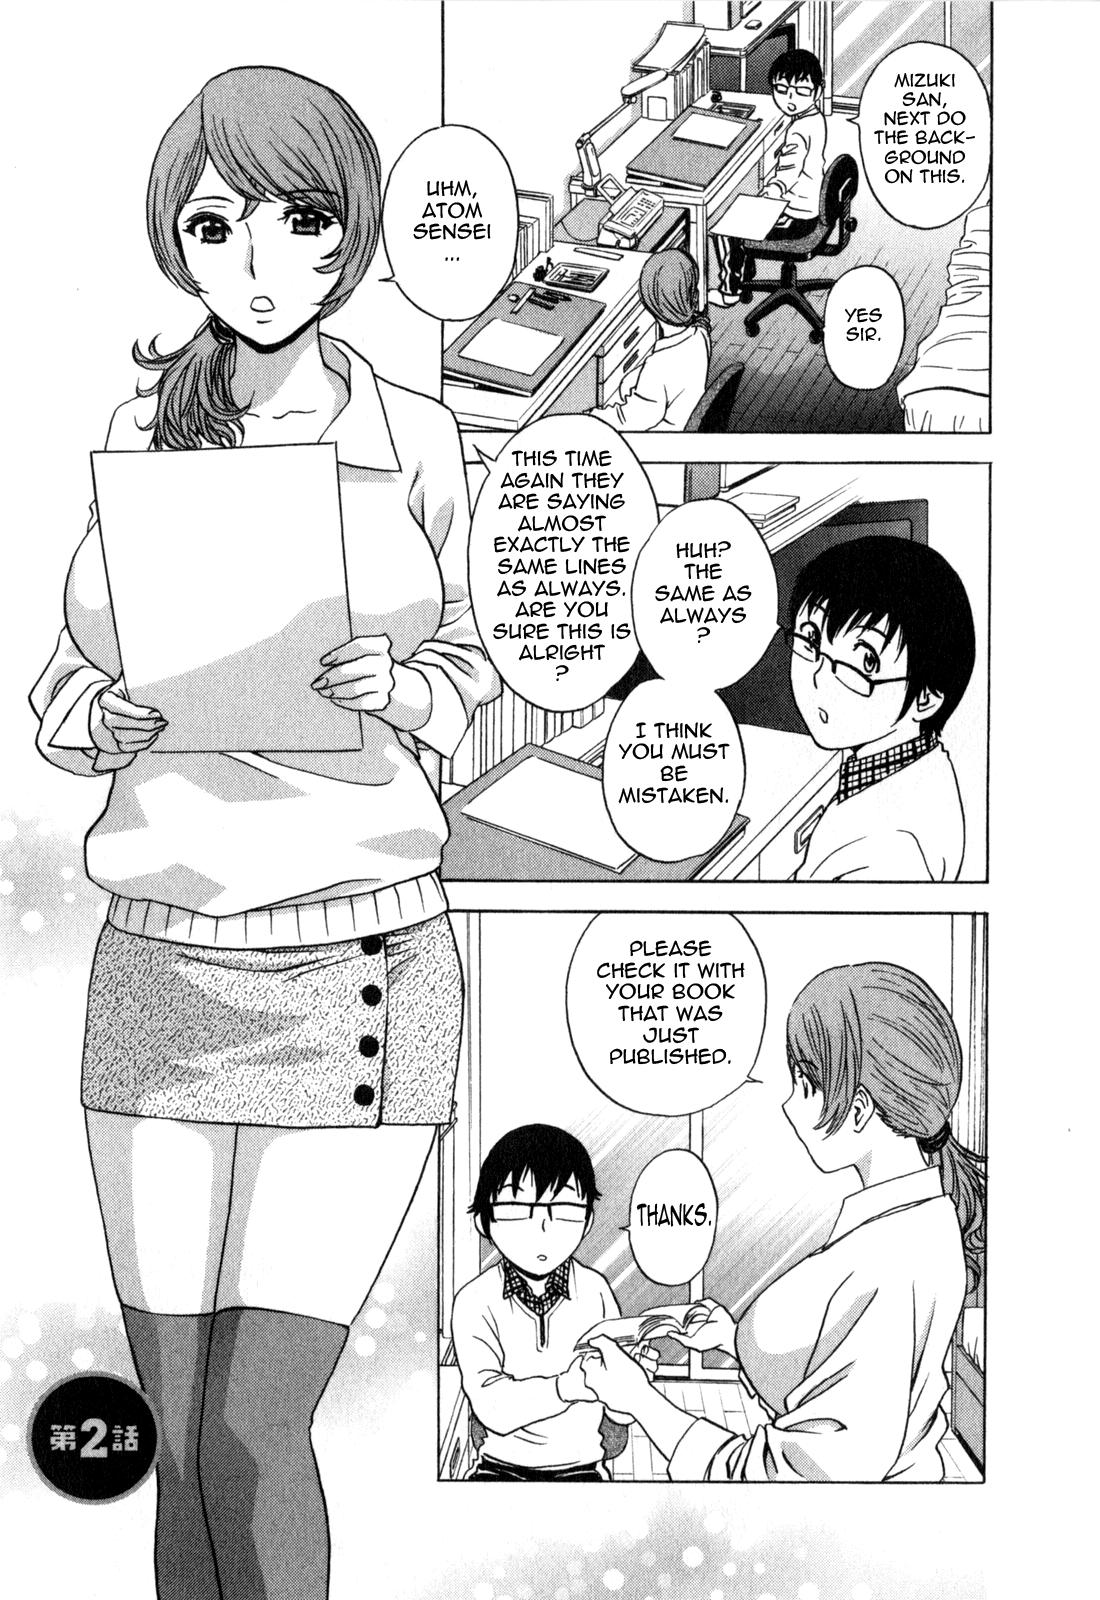 [Hidemaru] Life with Married Women Just Like a Manga 3 - Ch. 1-5 [English] {Tadanohito} 27